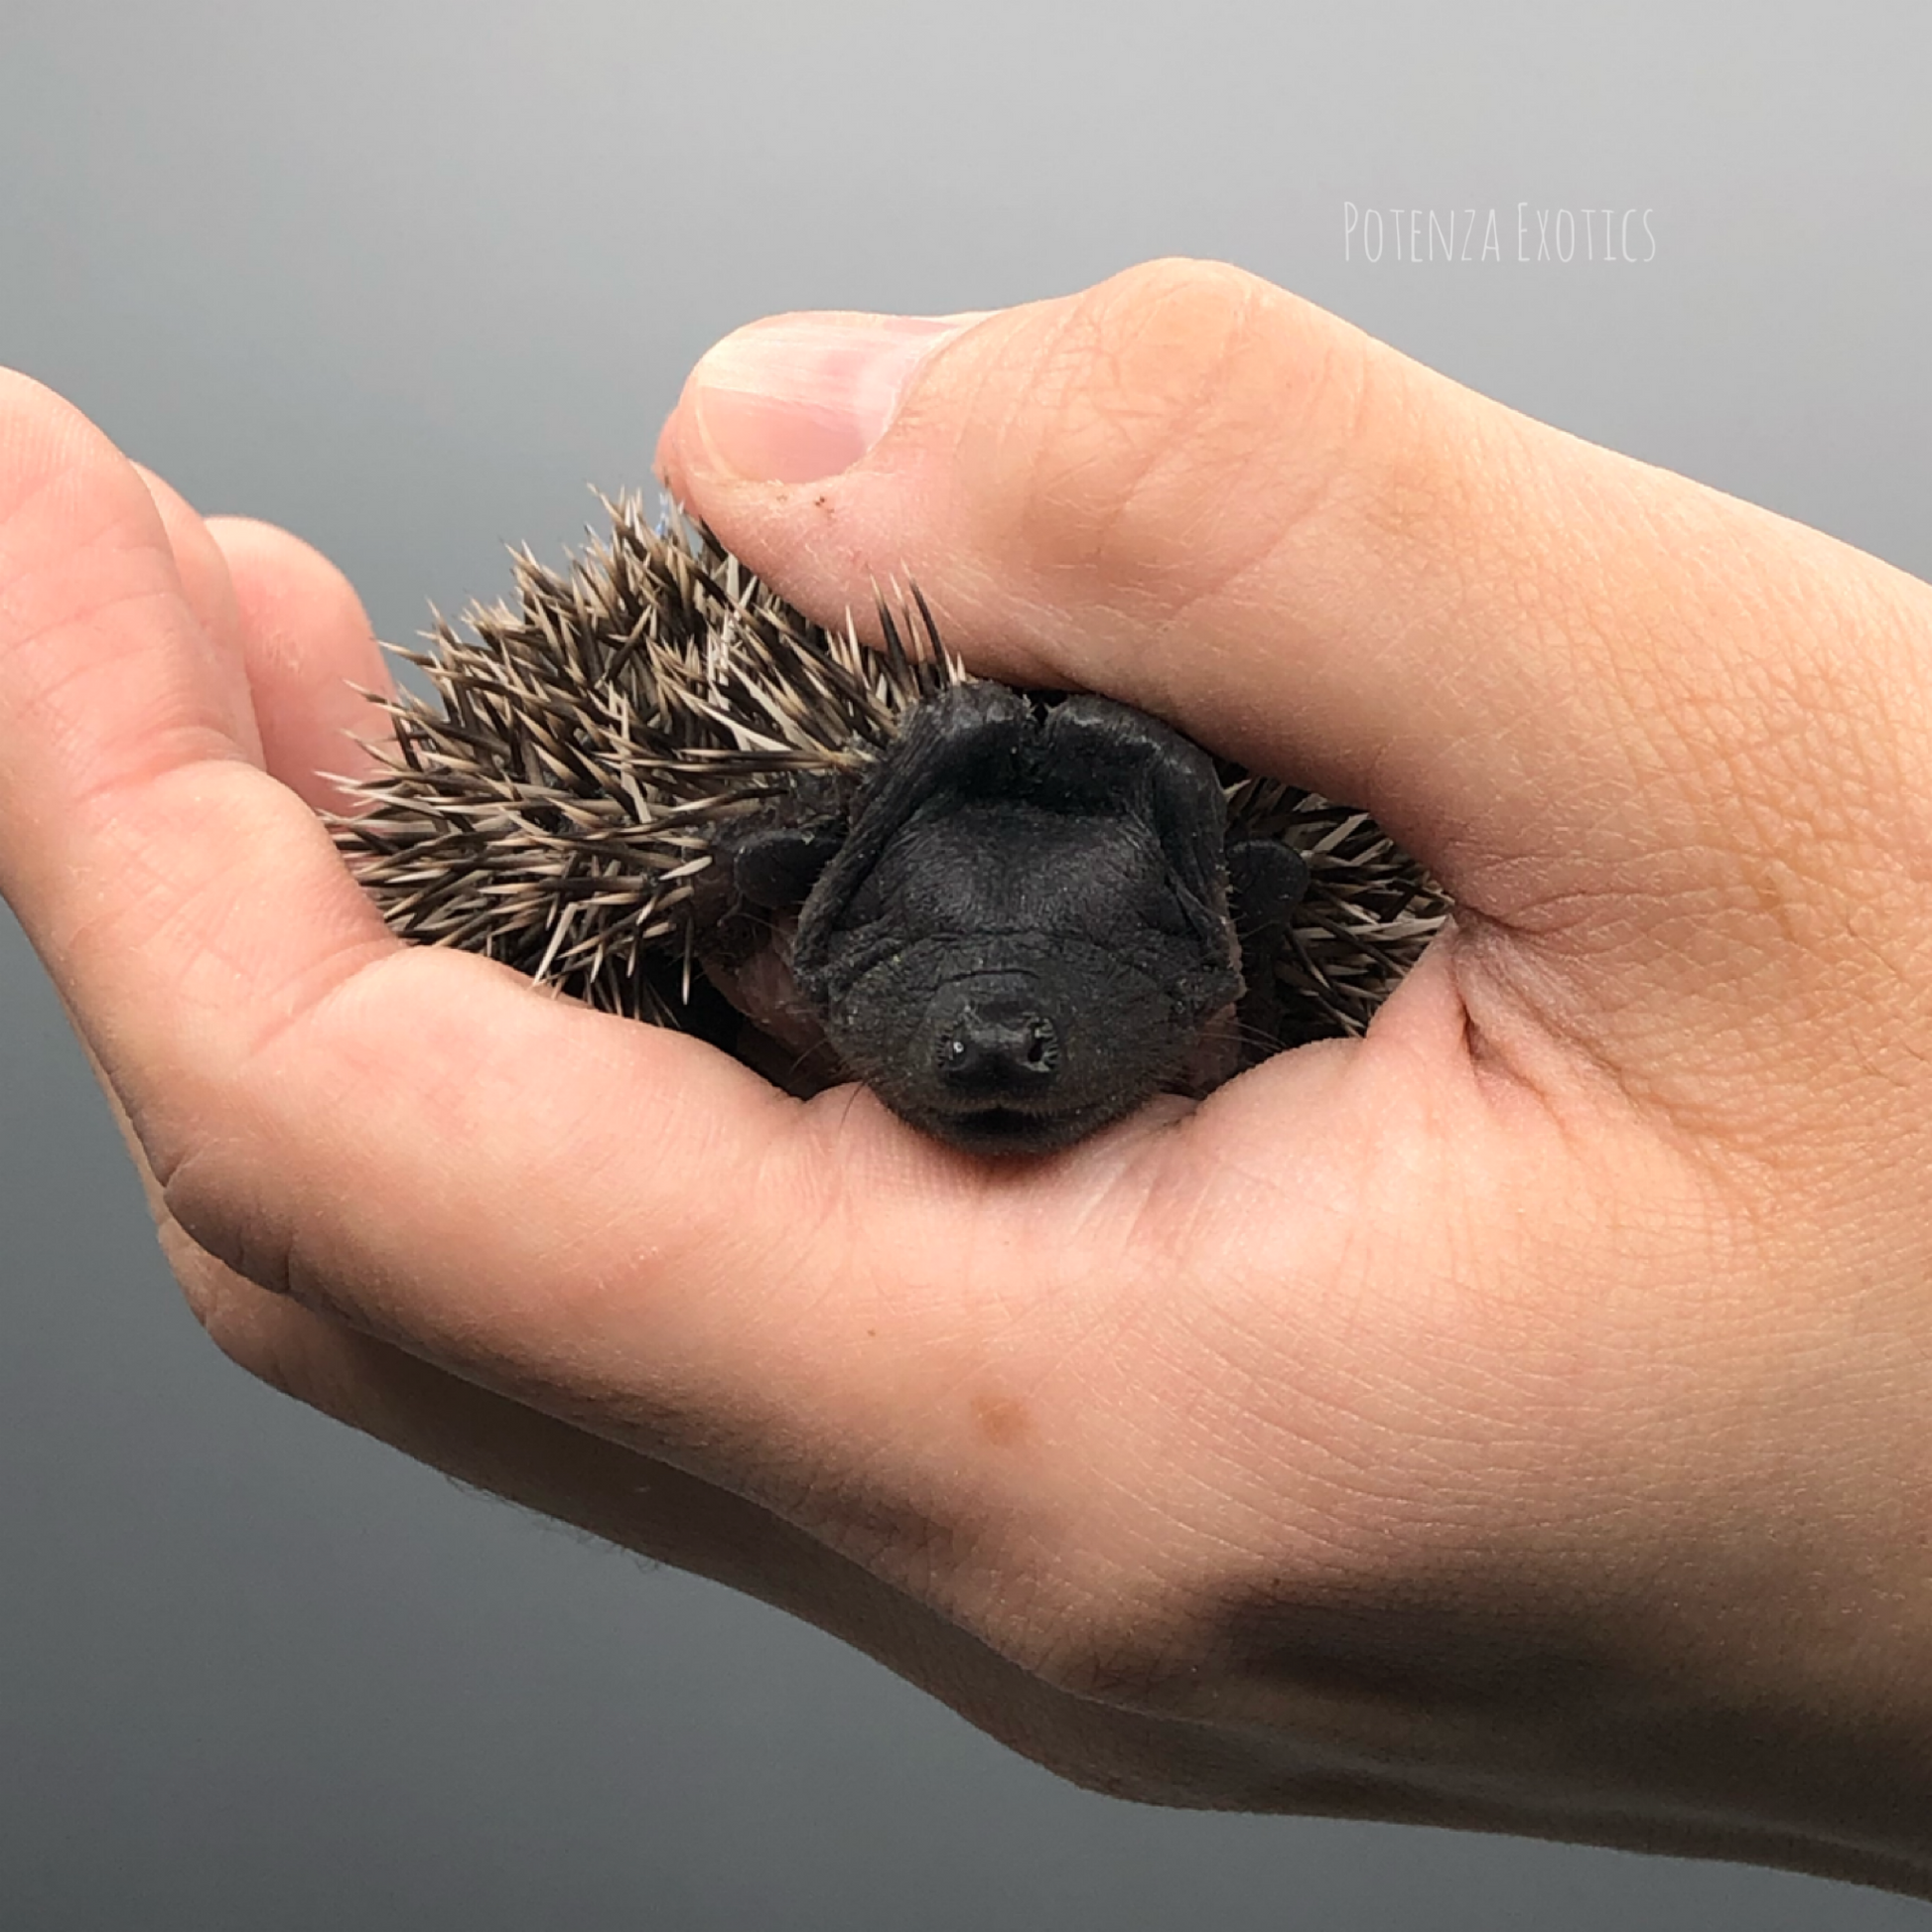 Baby Hedgehog for Sale 